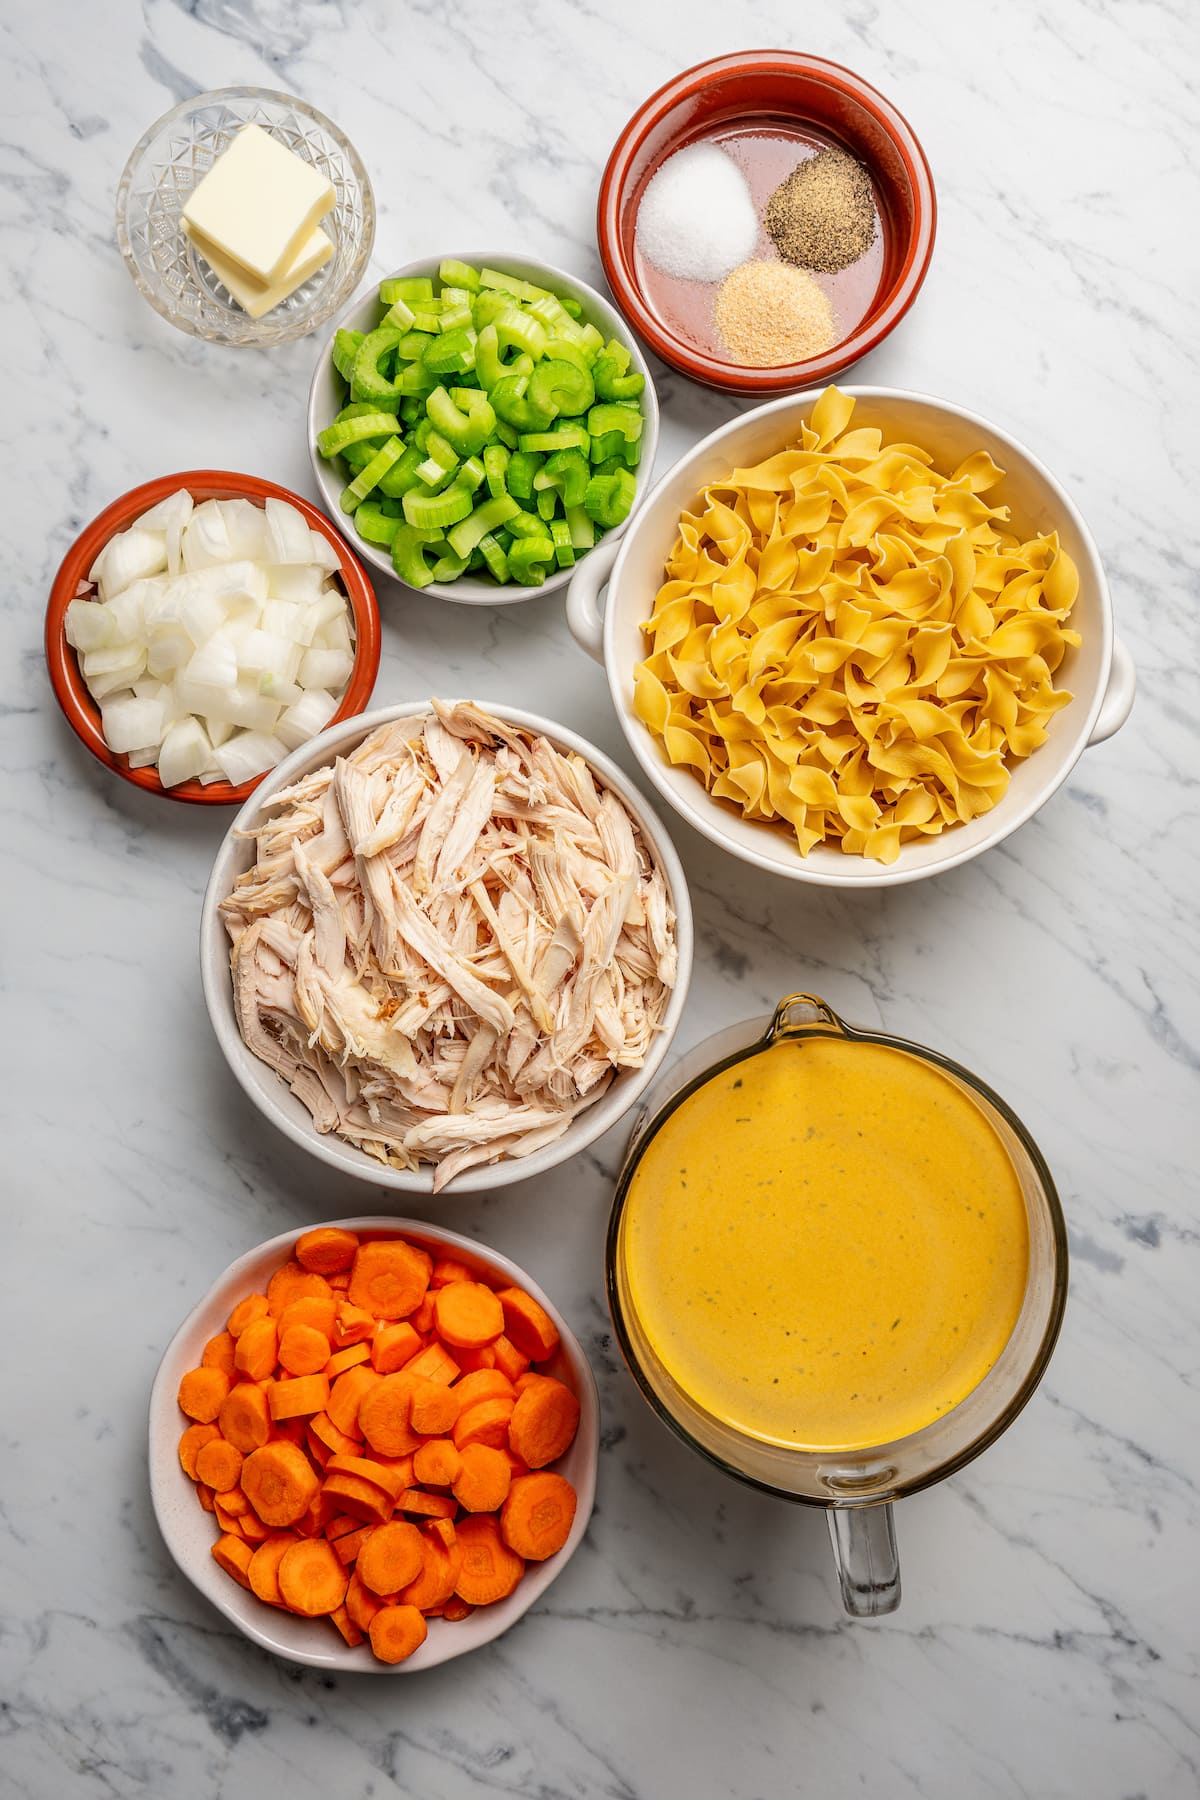 Ingredients for turkey noodle soup.